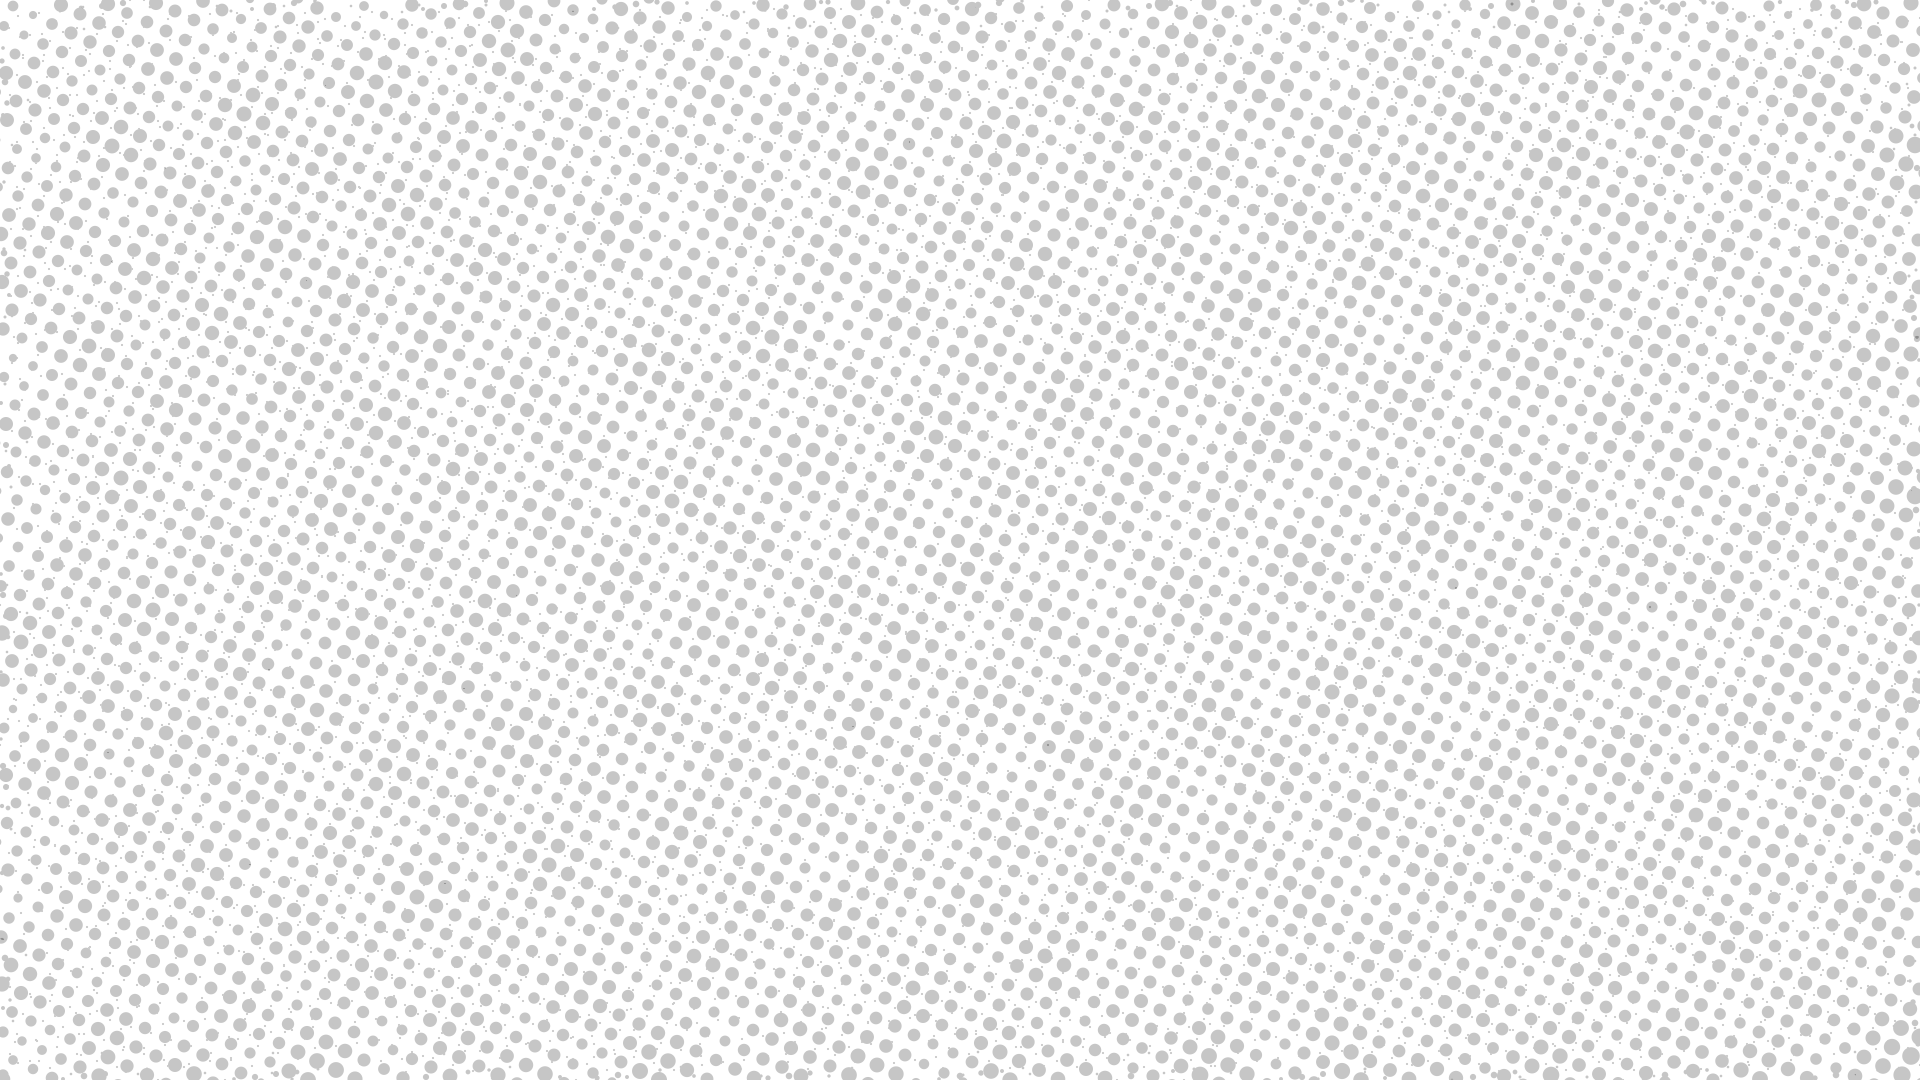 General 1920x1080 polka dots dots tiles minimalism white gray texture